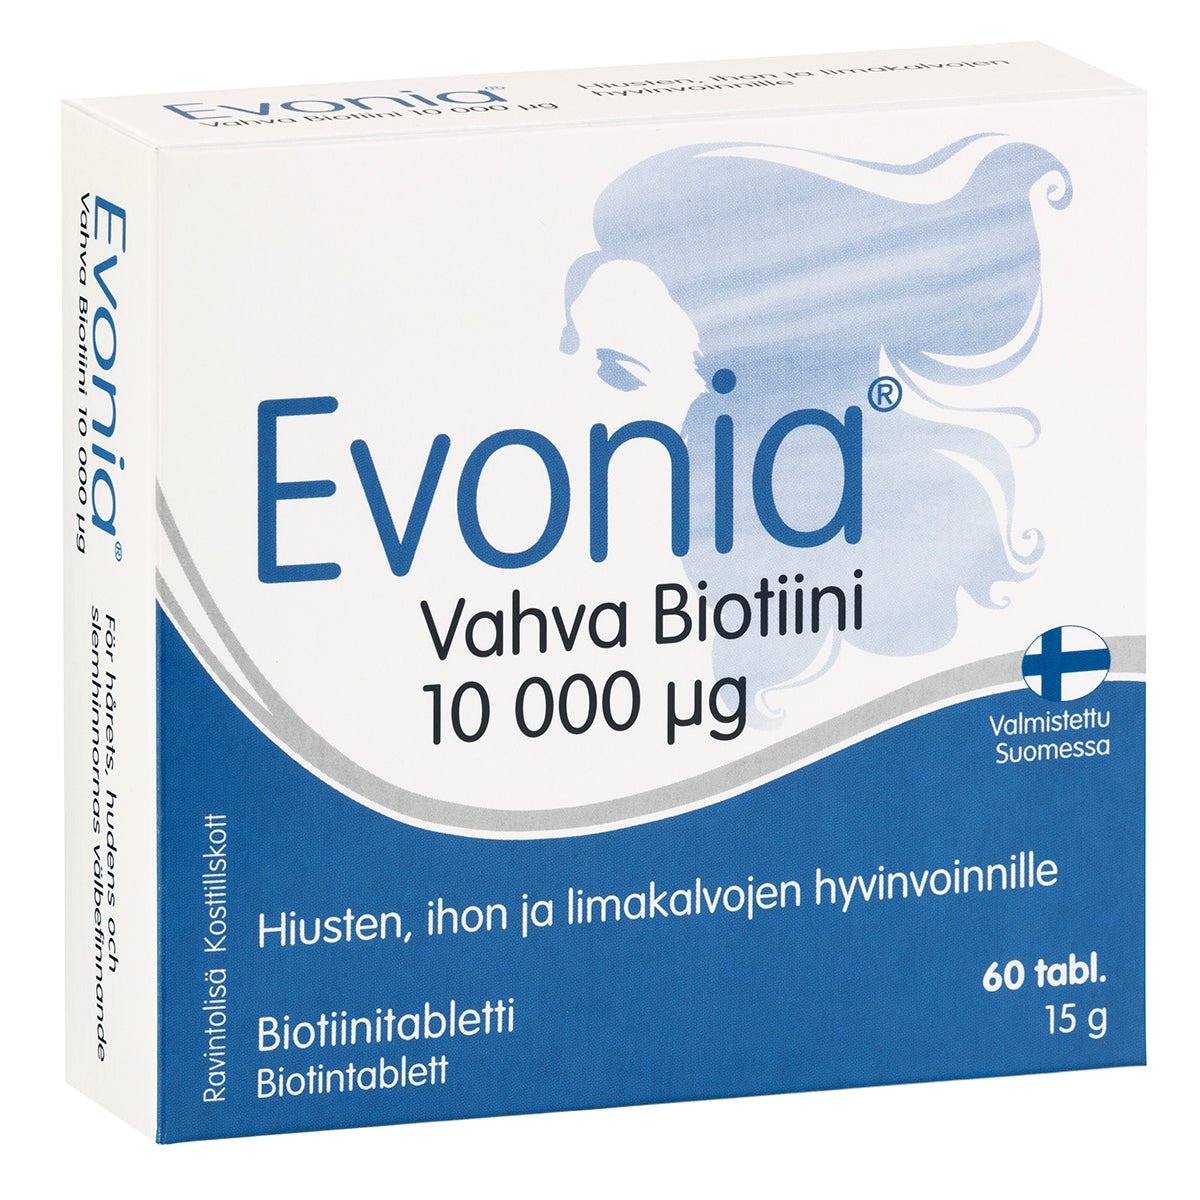 Evonia Vahva Biotiini 10 000 µg 60 tabl.